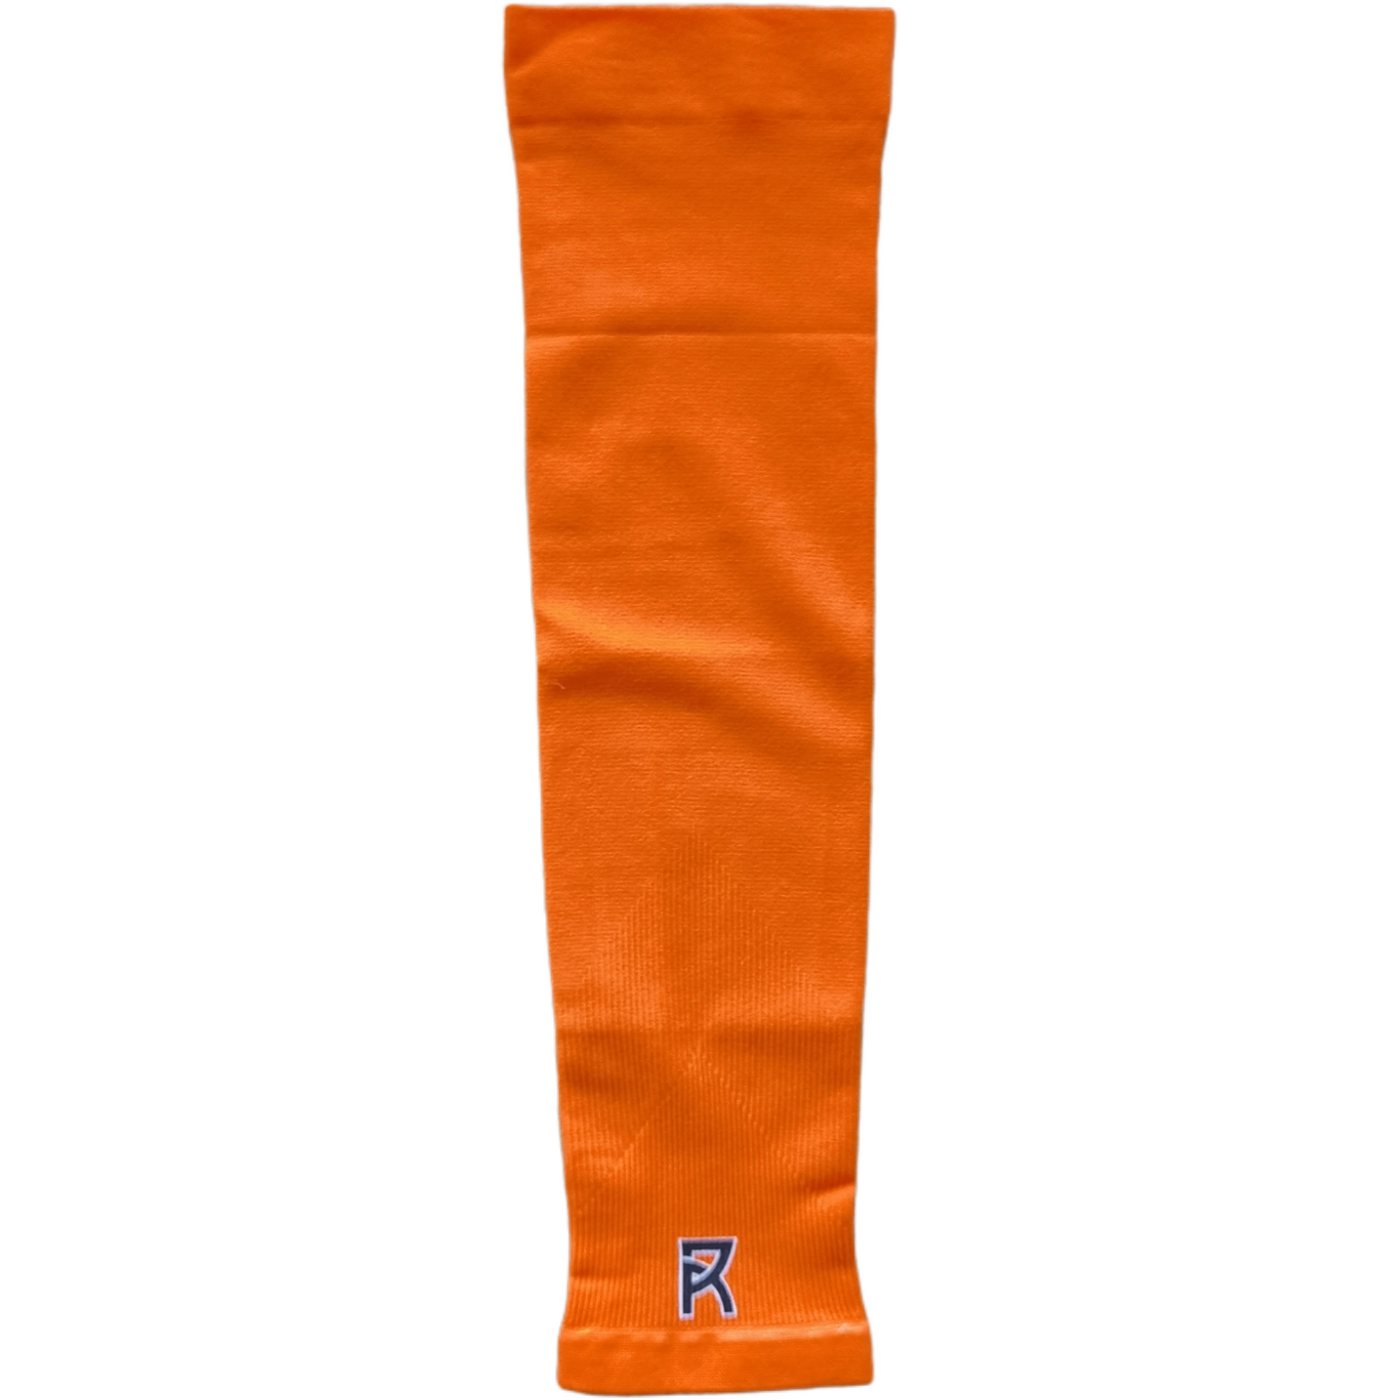 Compression Arm Sleeves 2-pack - BCN - Premium Sleeve from Reyrr Athletics - Shop now at Reyrr Athletics